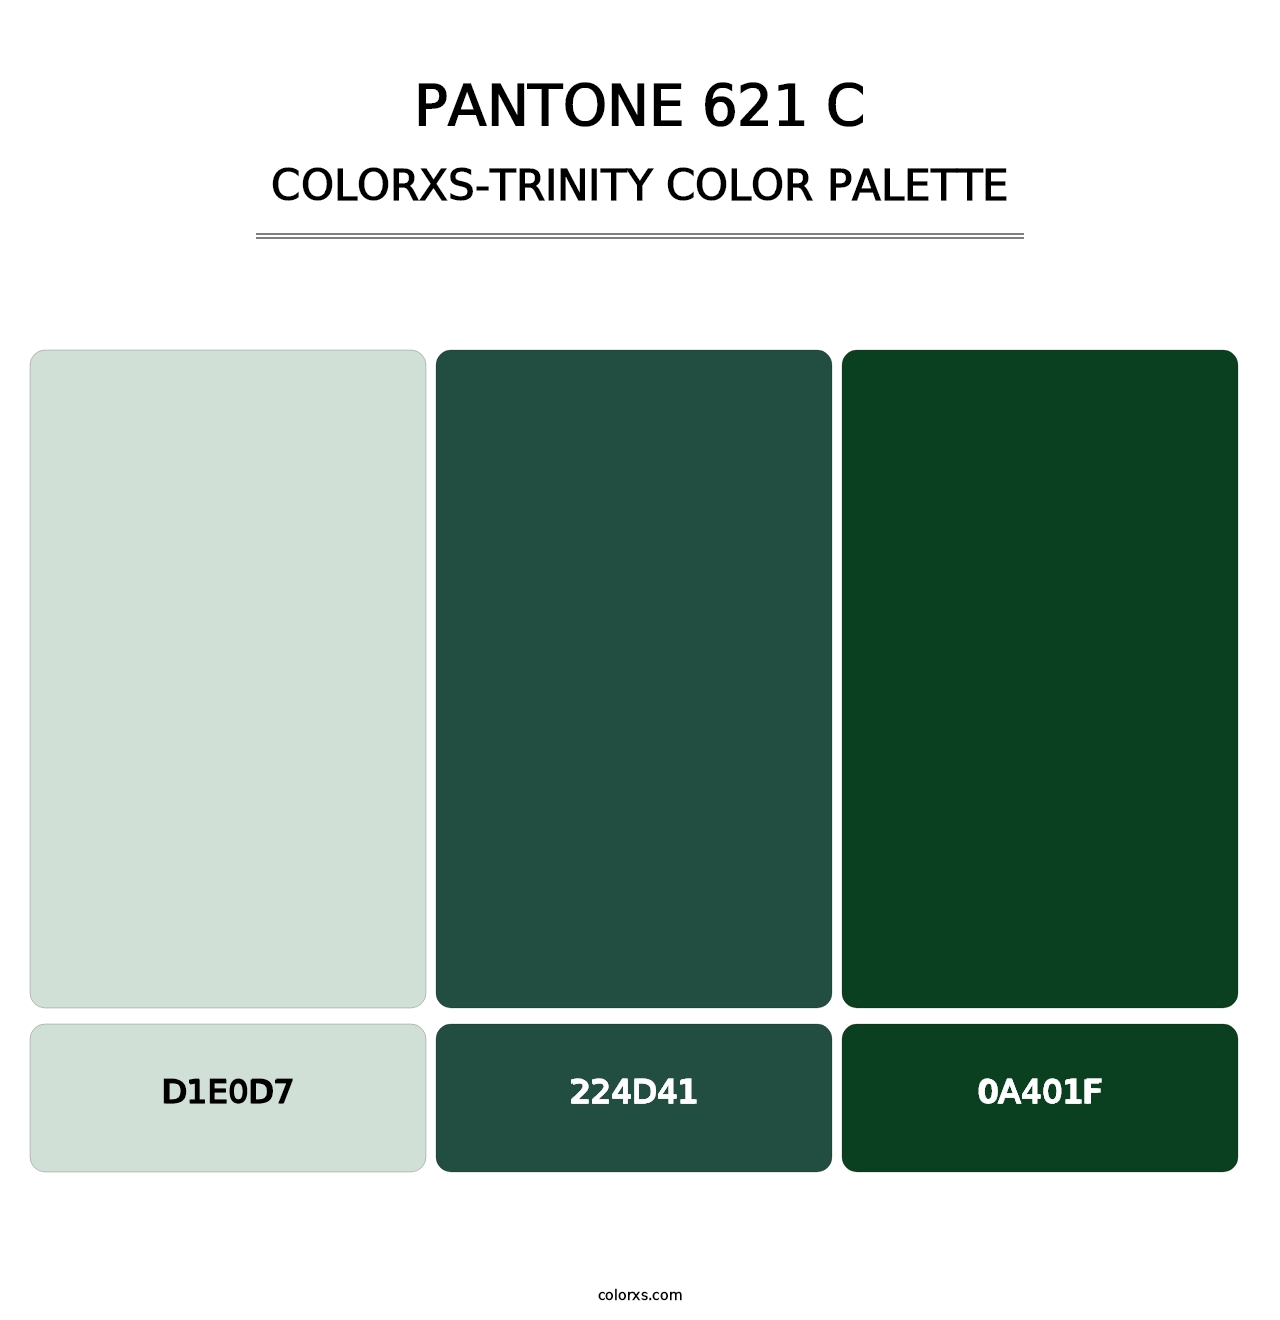 PANTONE 621 C - Colorxs Trinity Palette